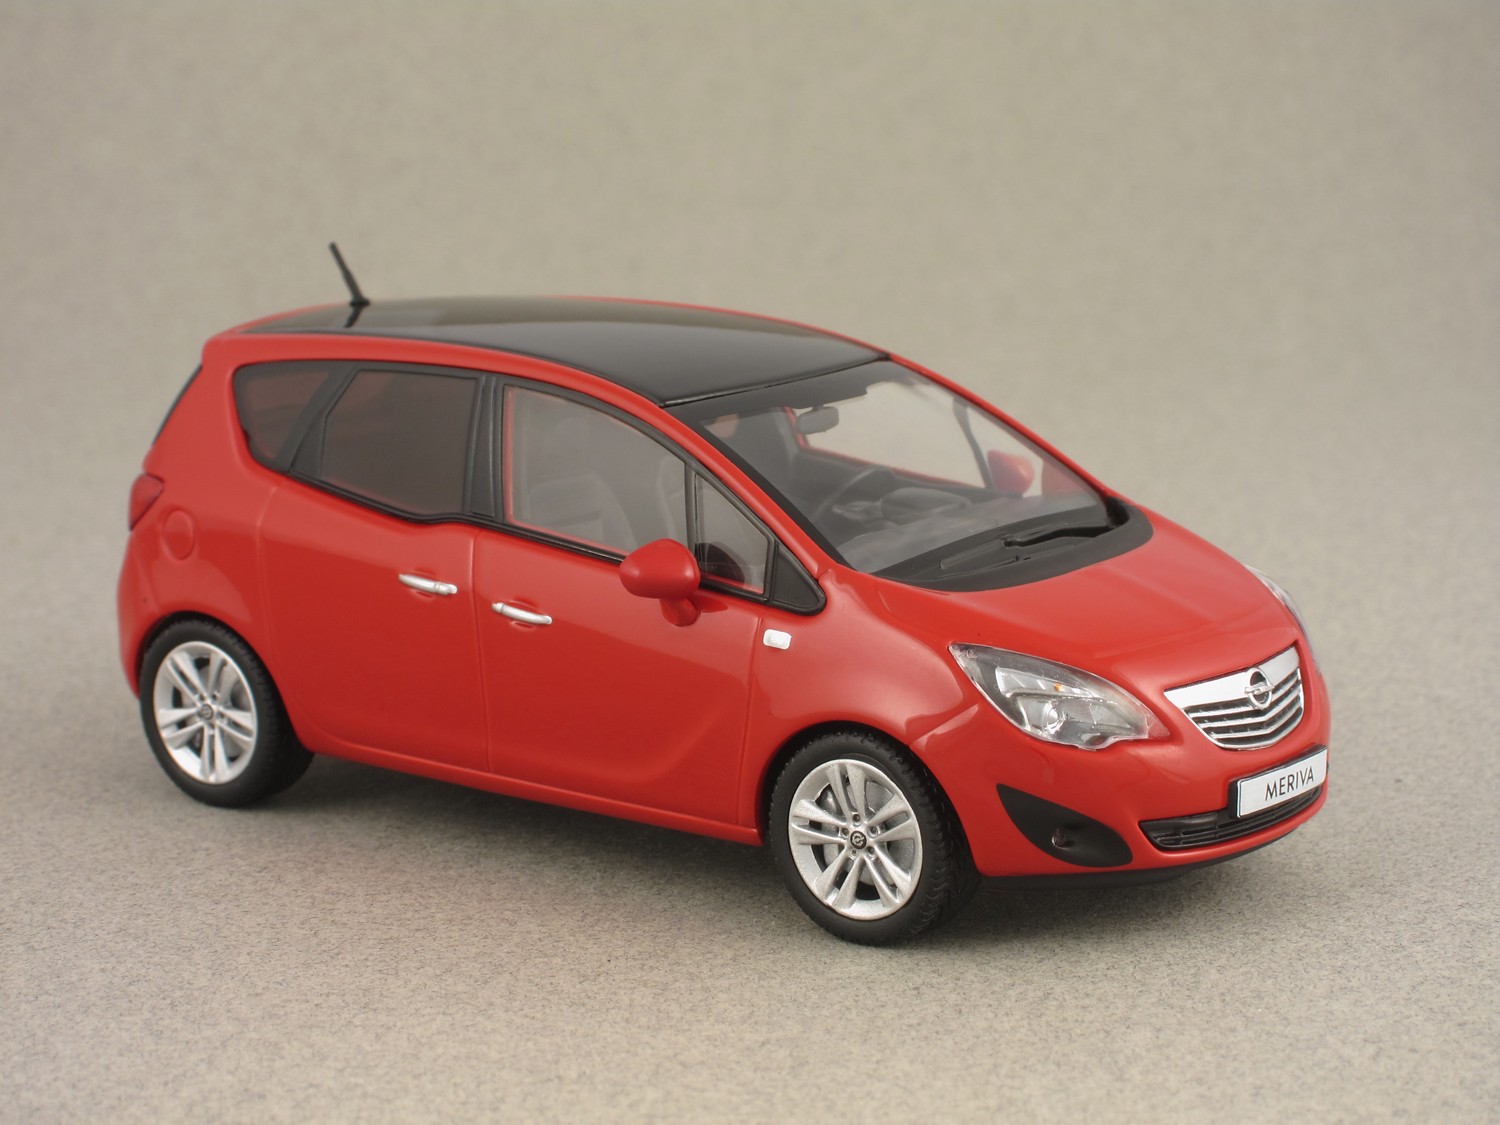 Opel Meriva 2010 rouge par Minichamps